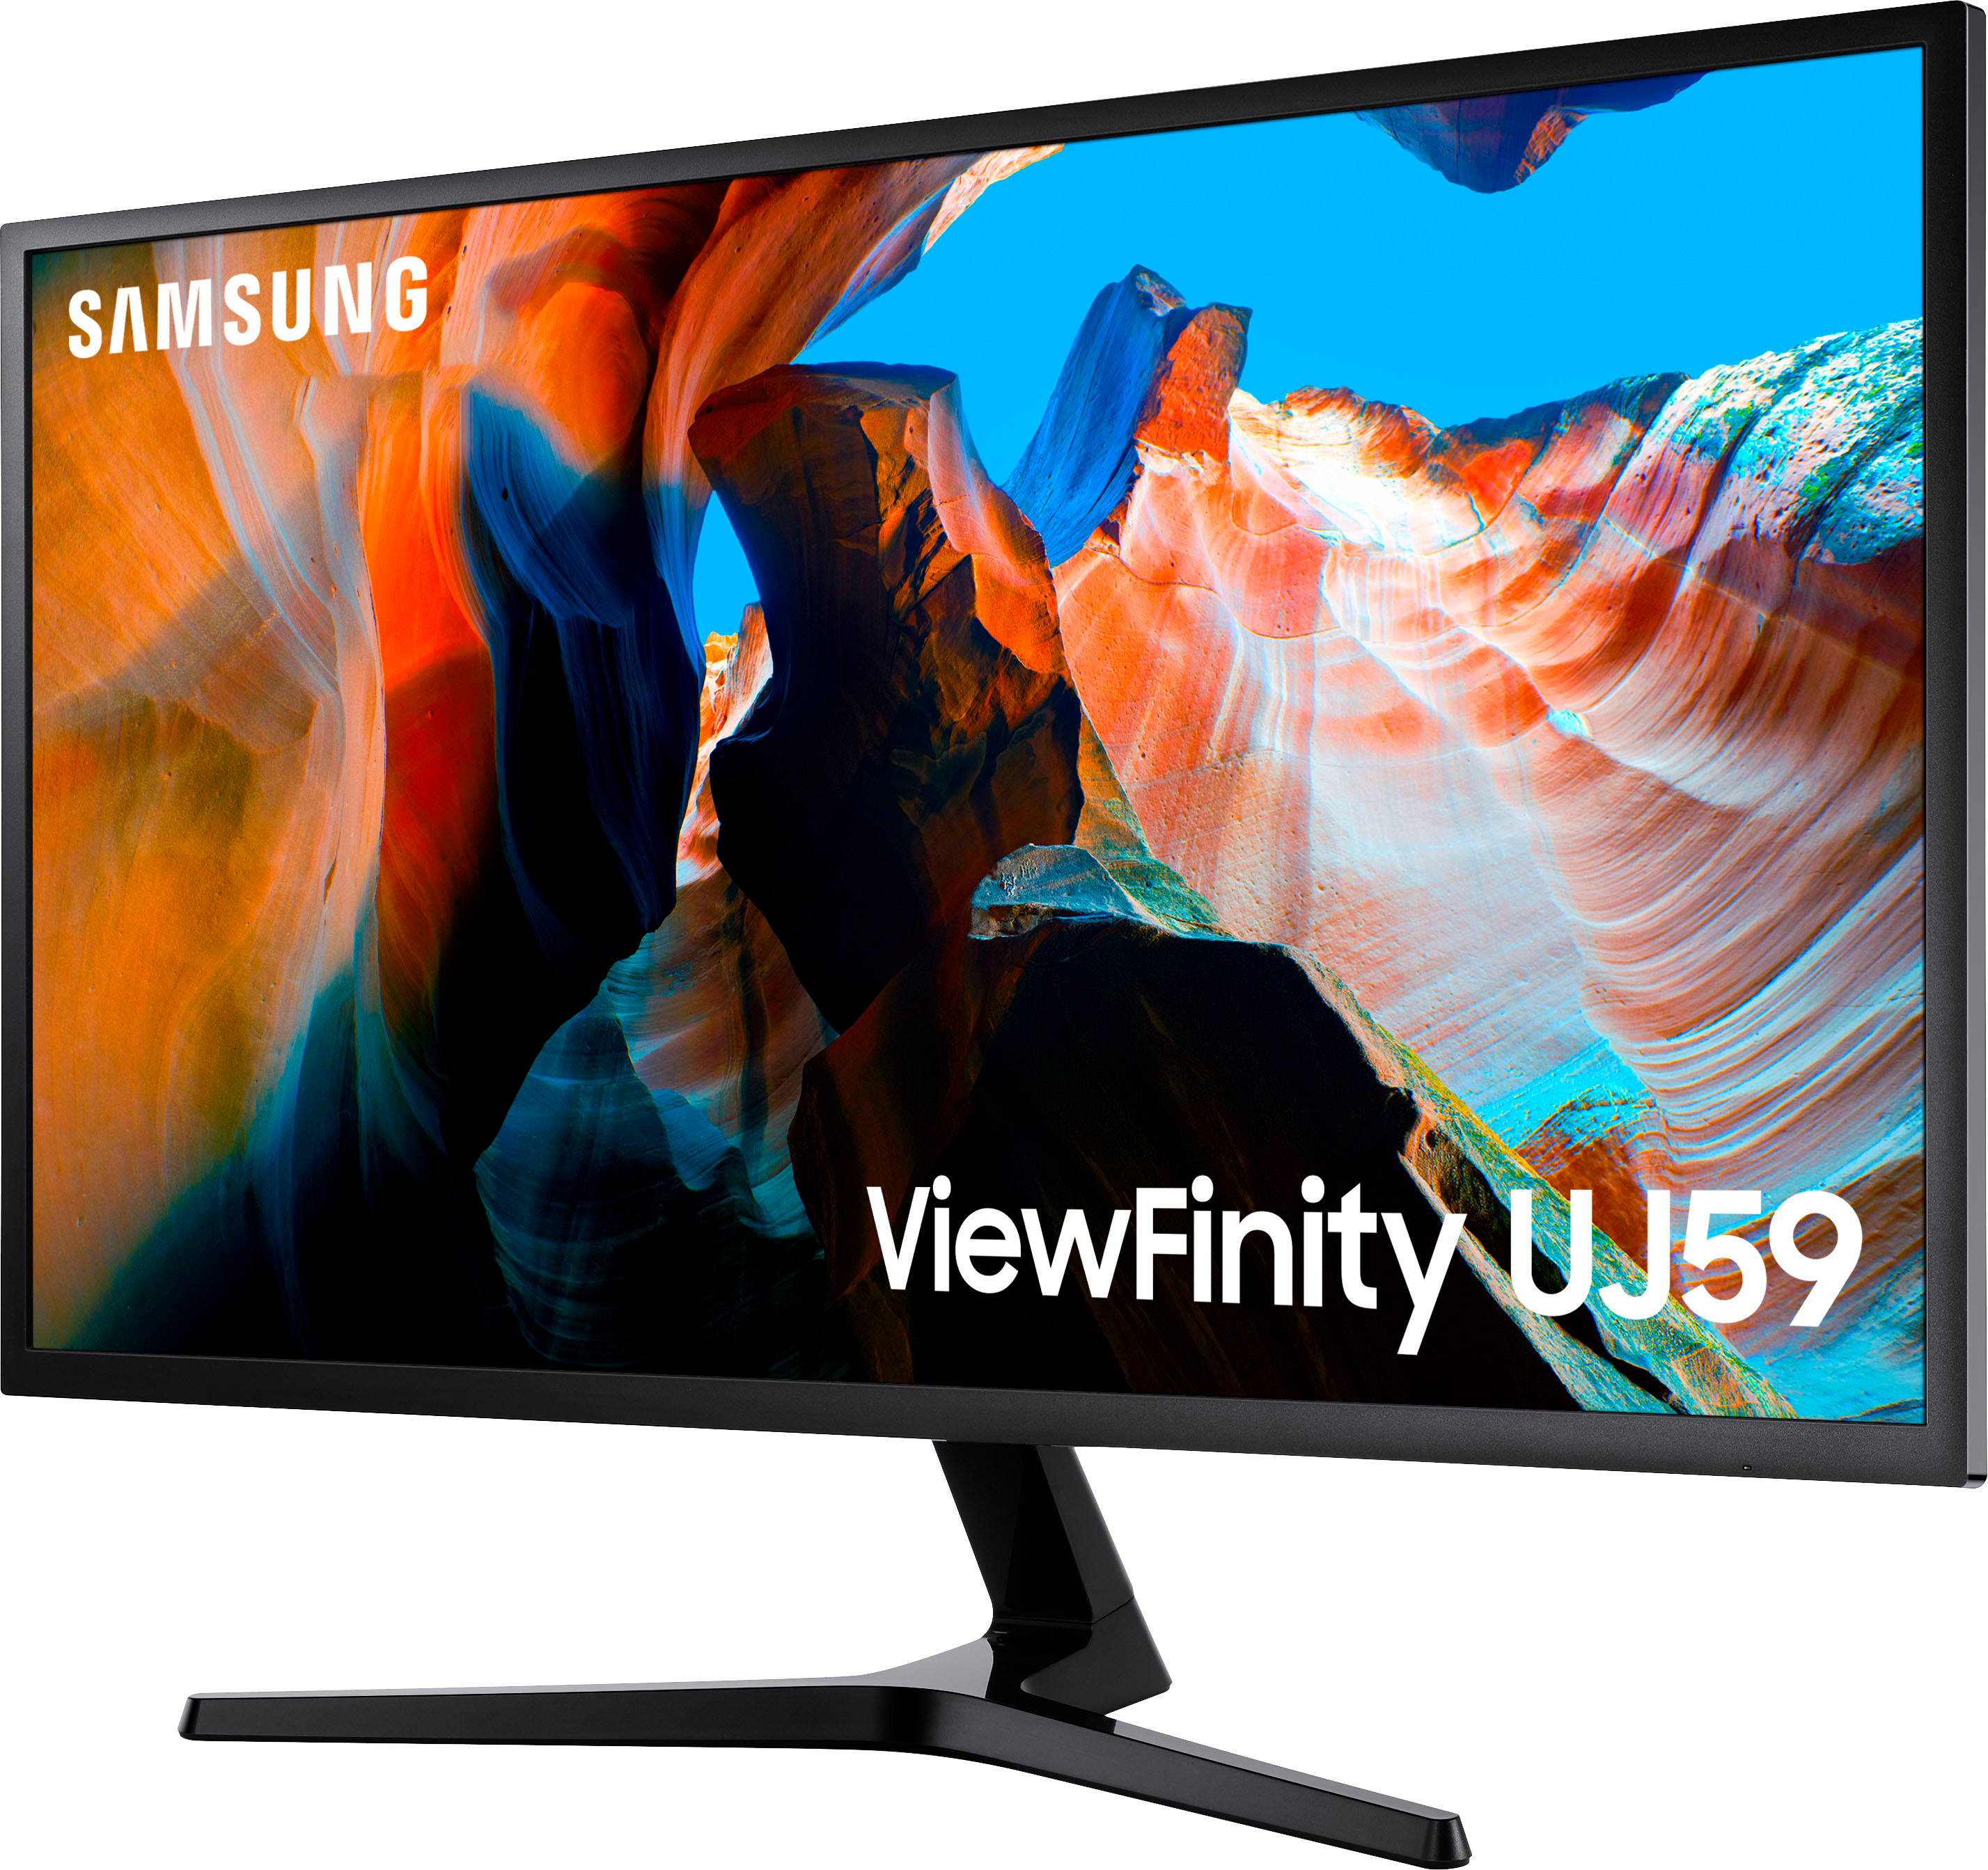 Samsung 32” ViewFinity UJ590 UHD Monitor Dark Gray/Blue U32J590 - Best Buy